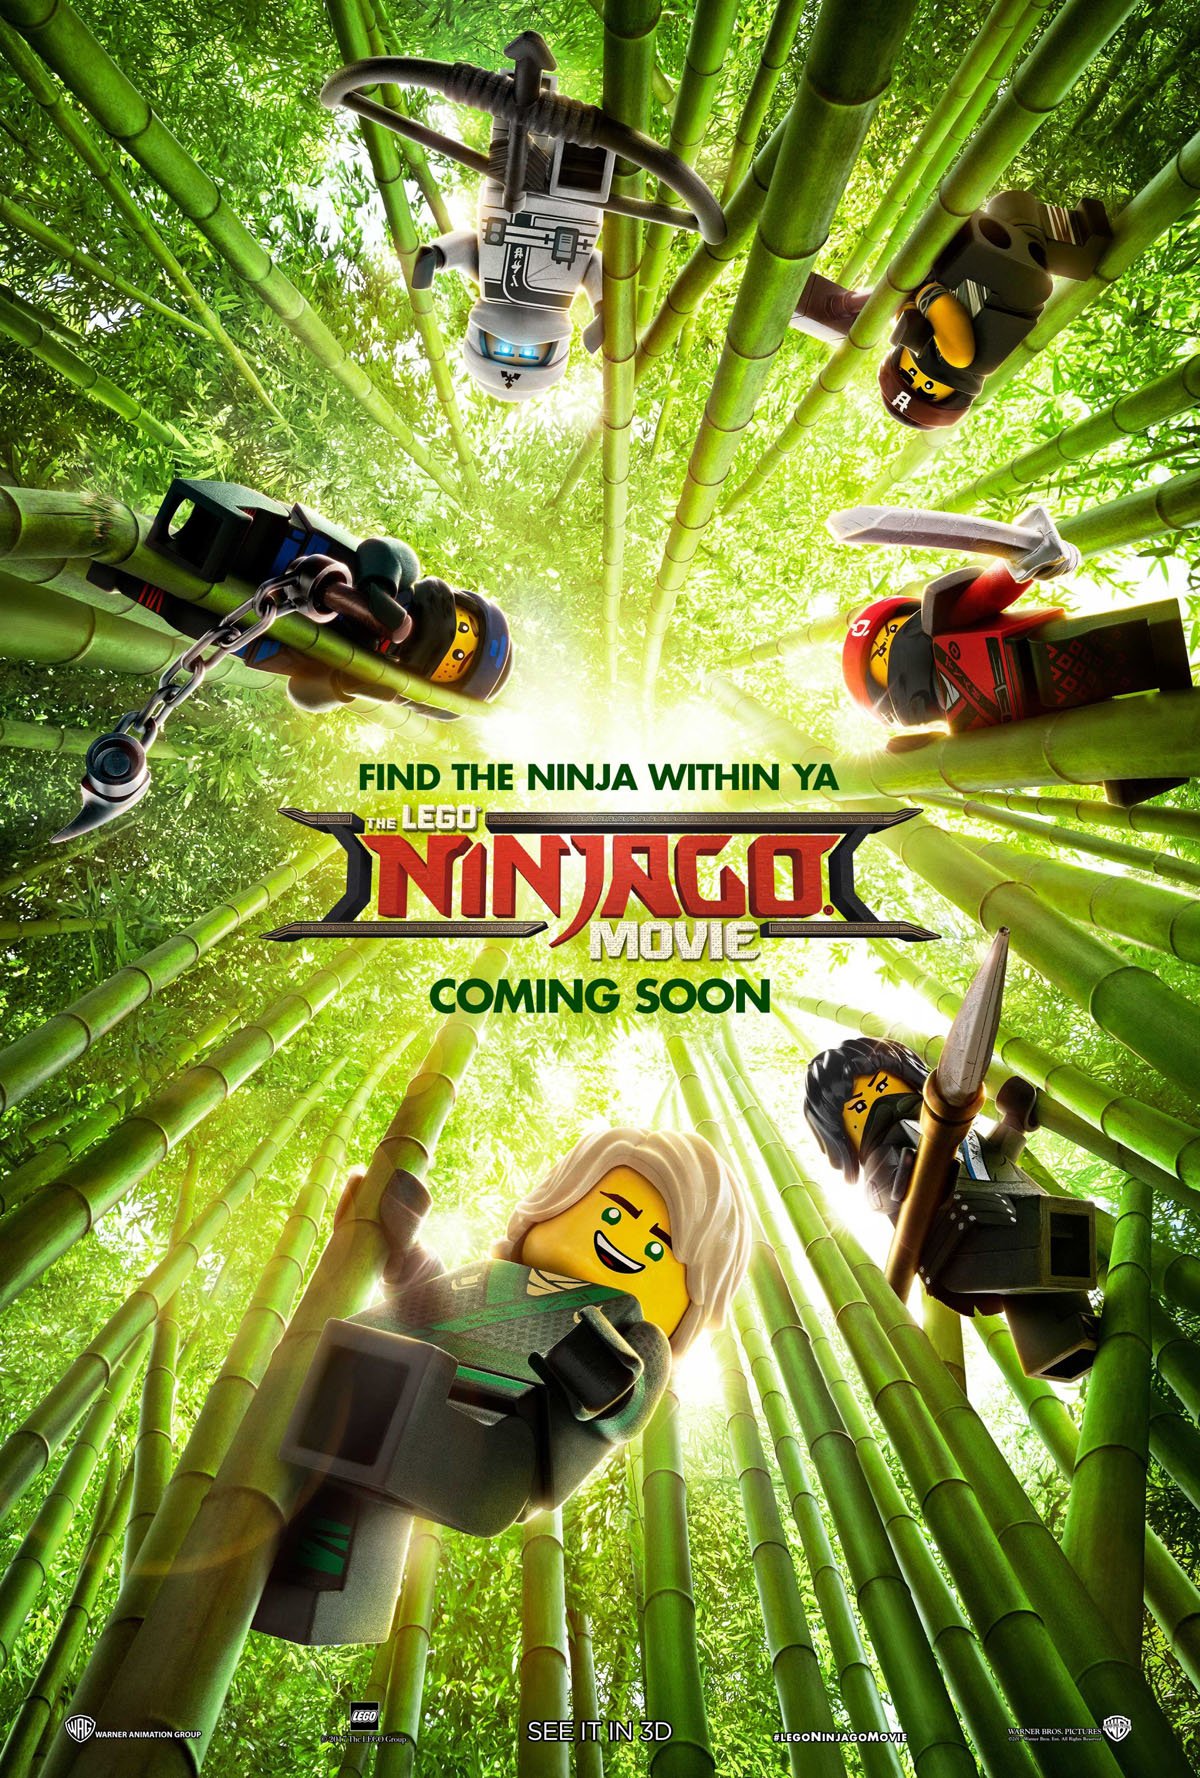 LEGO Ninjago : Le Film : Affiche